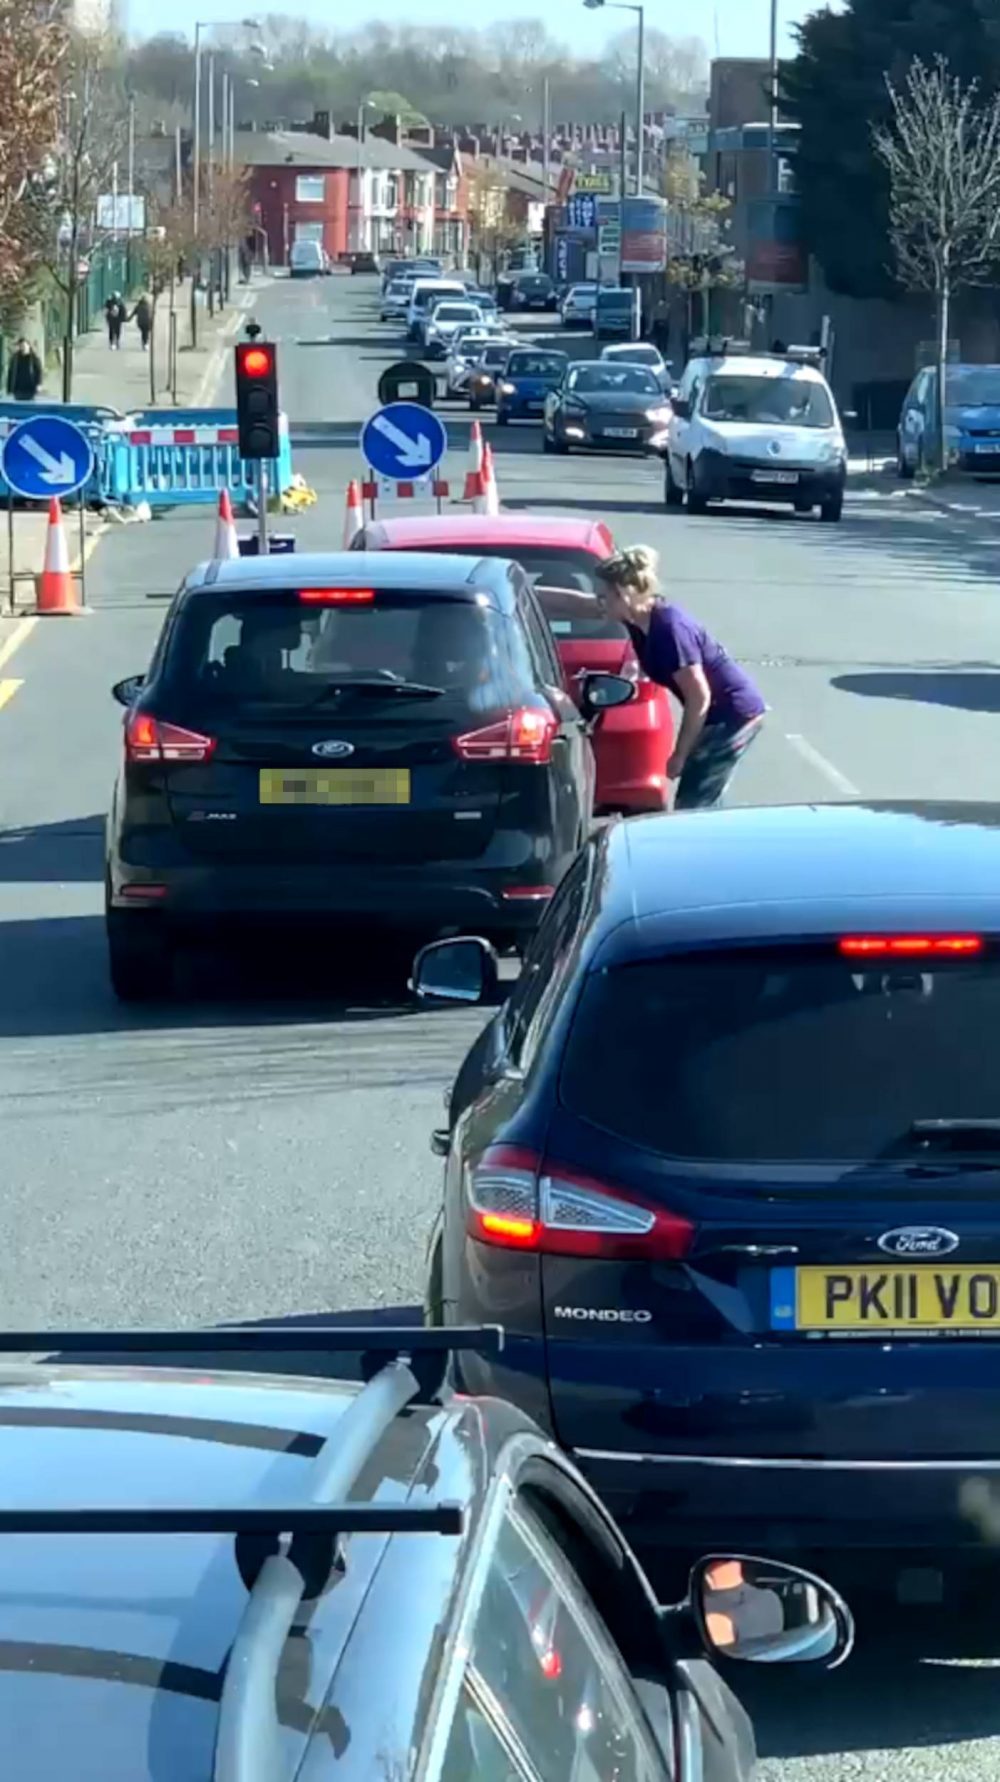 Woman spits on car | Transport News UK